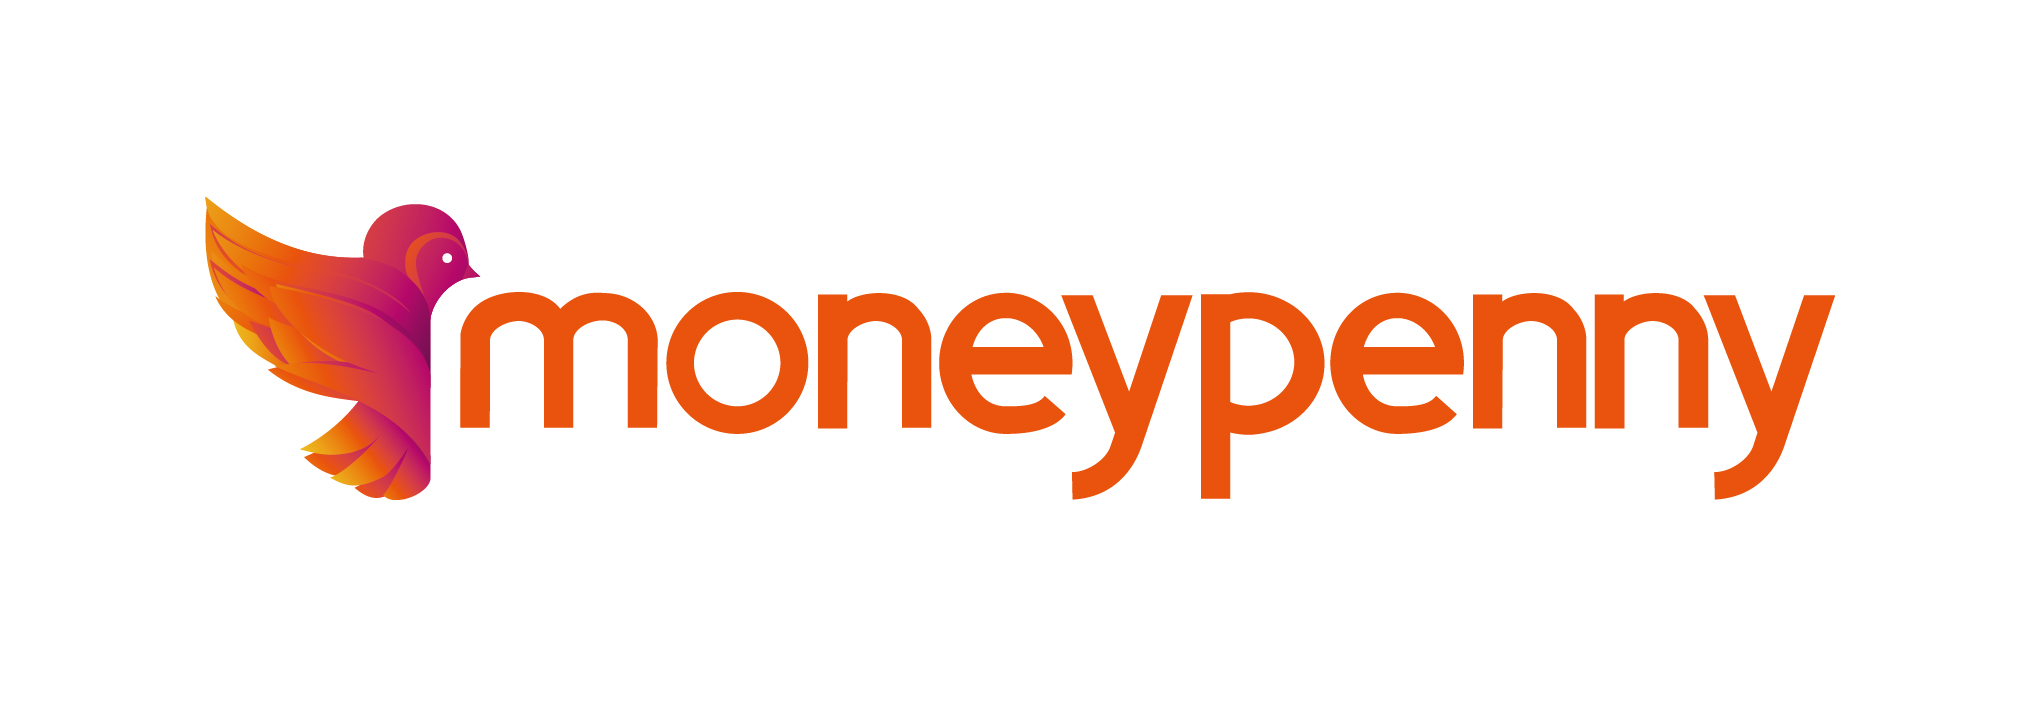 Moneypenny bird logo - pro-manchester